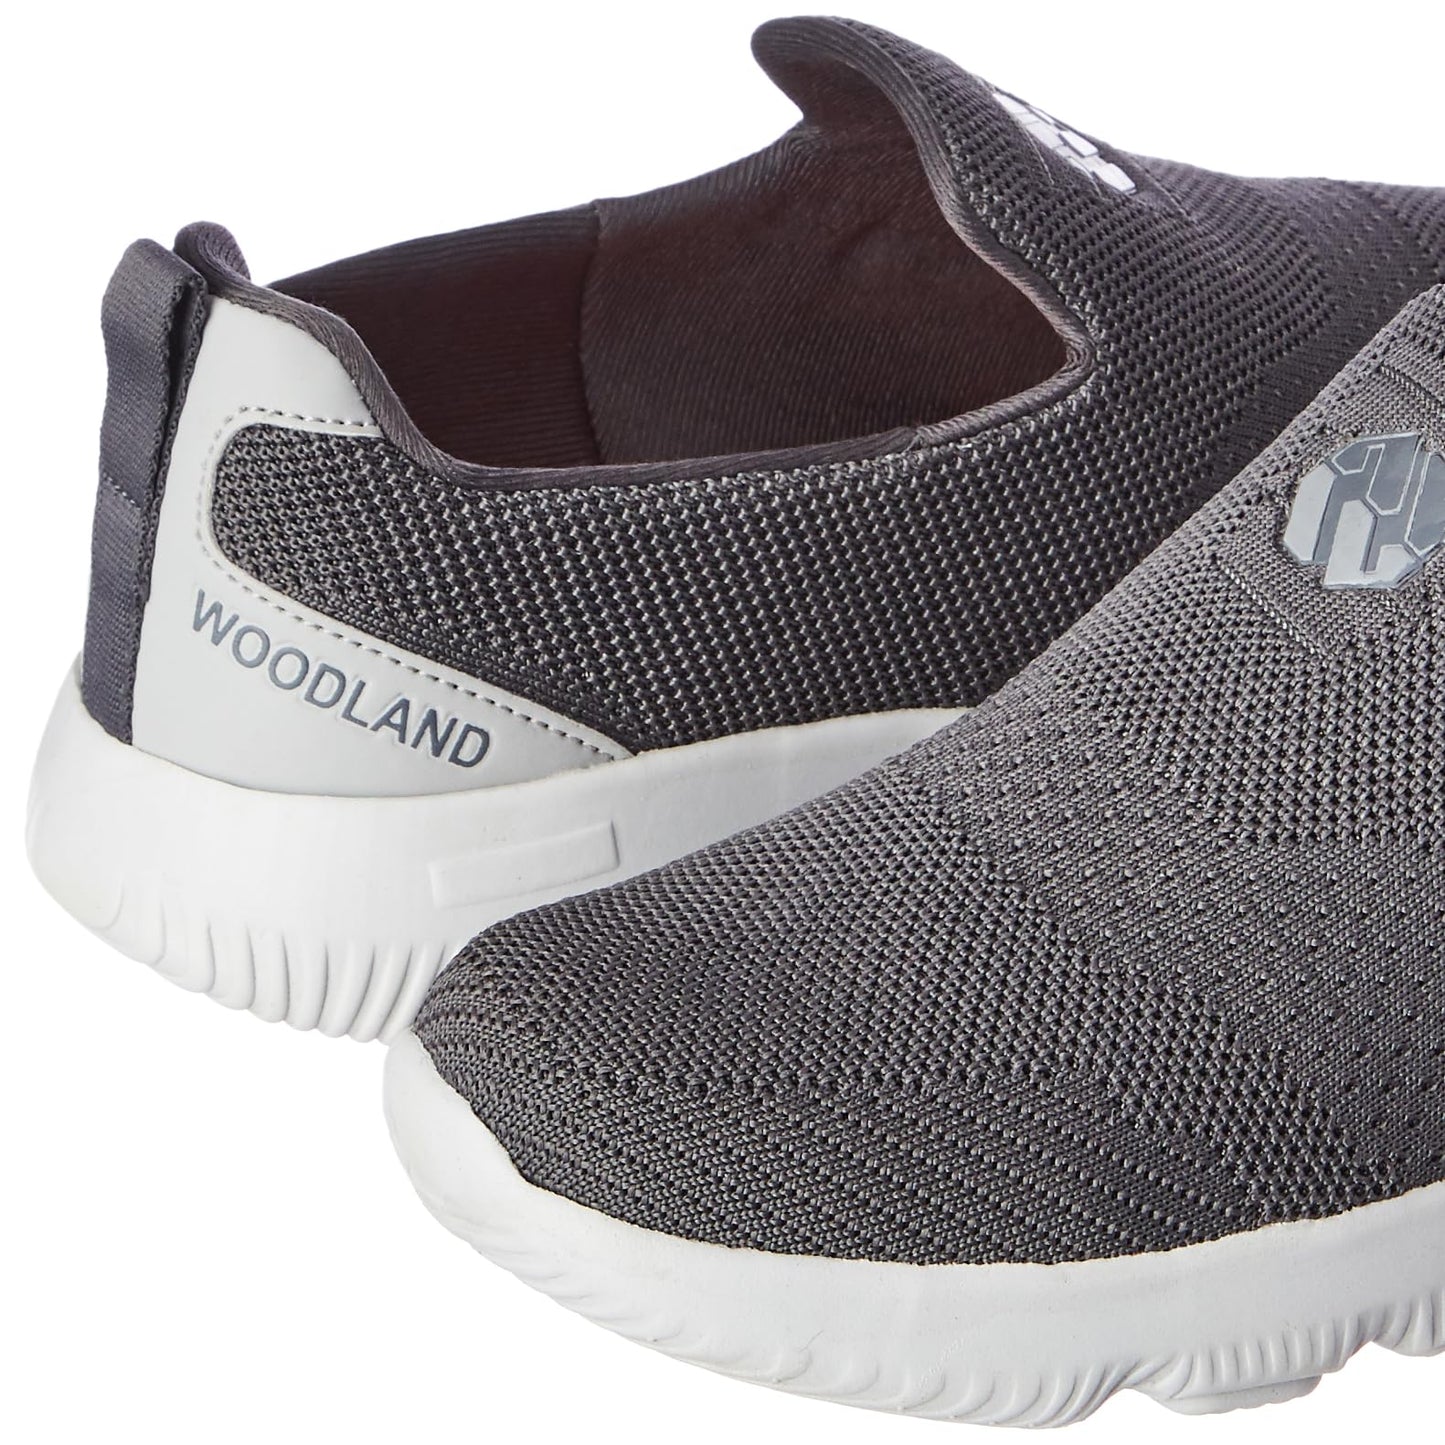 Woodland Men's Grey MESH Sports Shoes-10 UK (44 EU) (Dgrey)